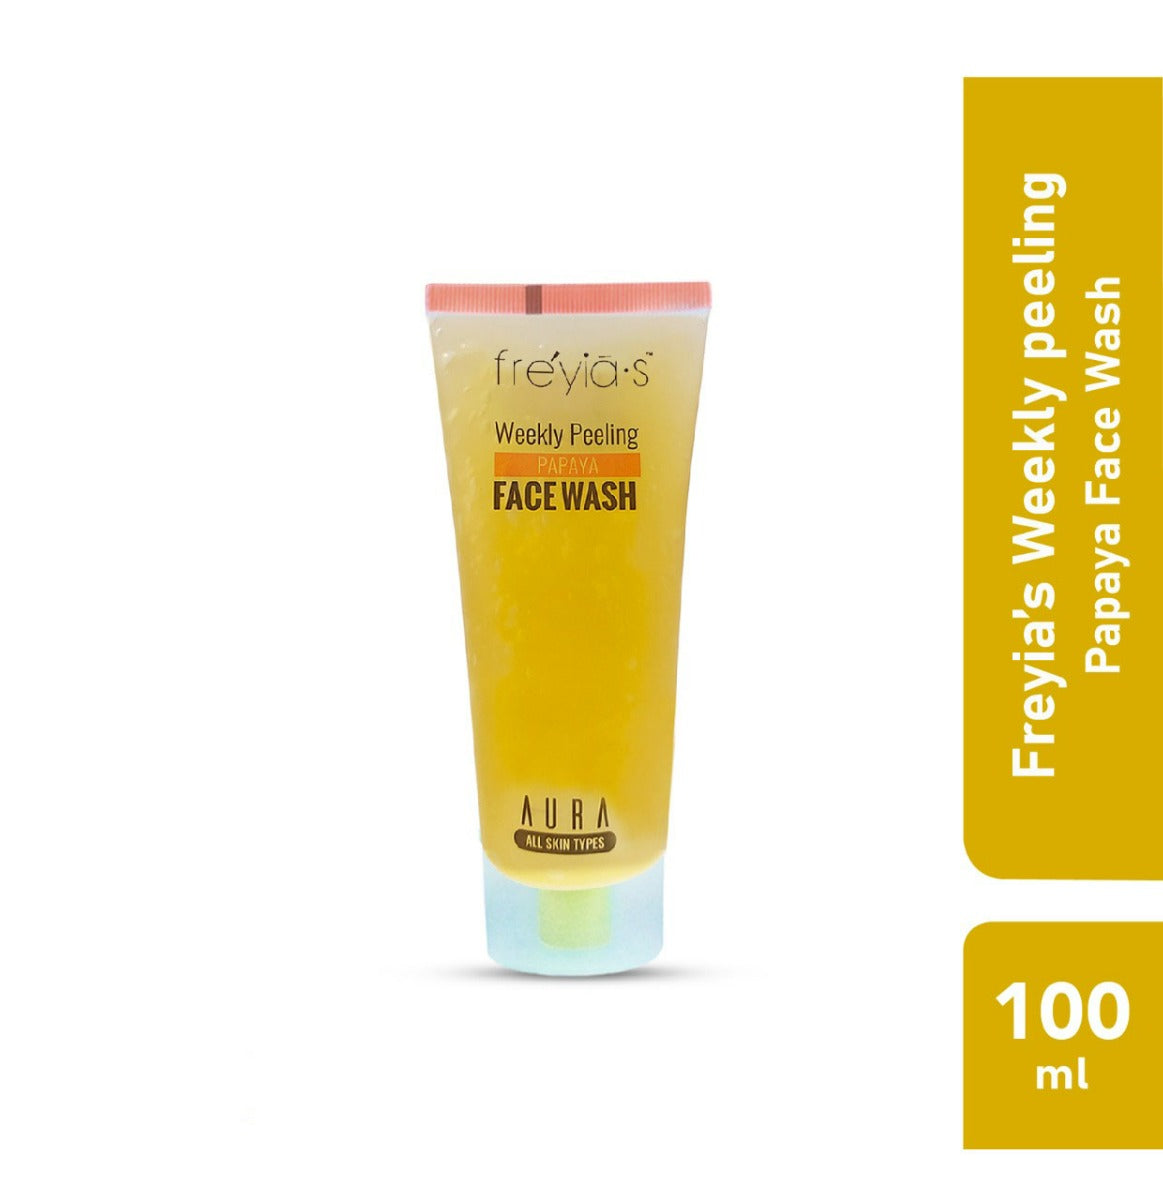 Freyias Weekly Peeling Face Wash (100ml) - Papaya